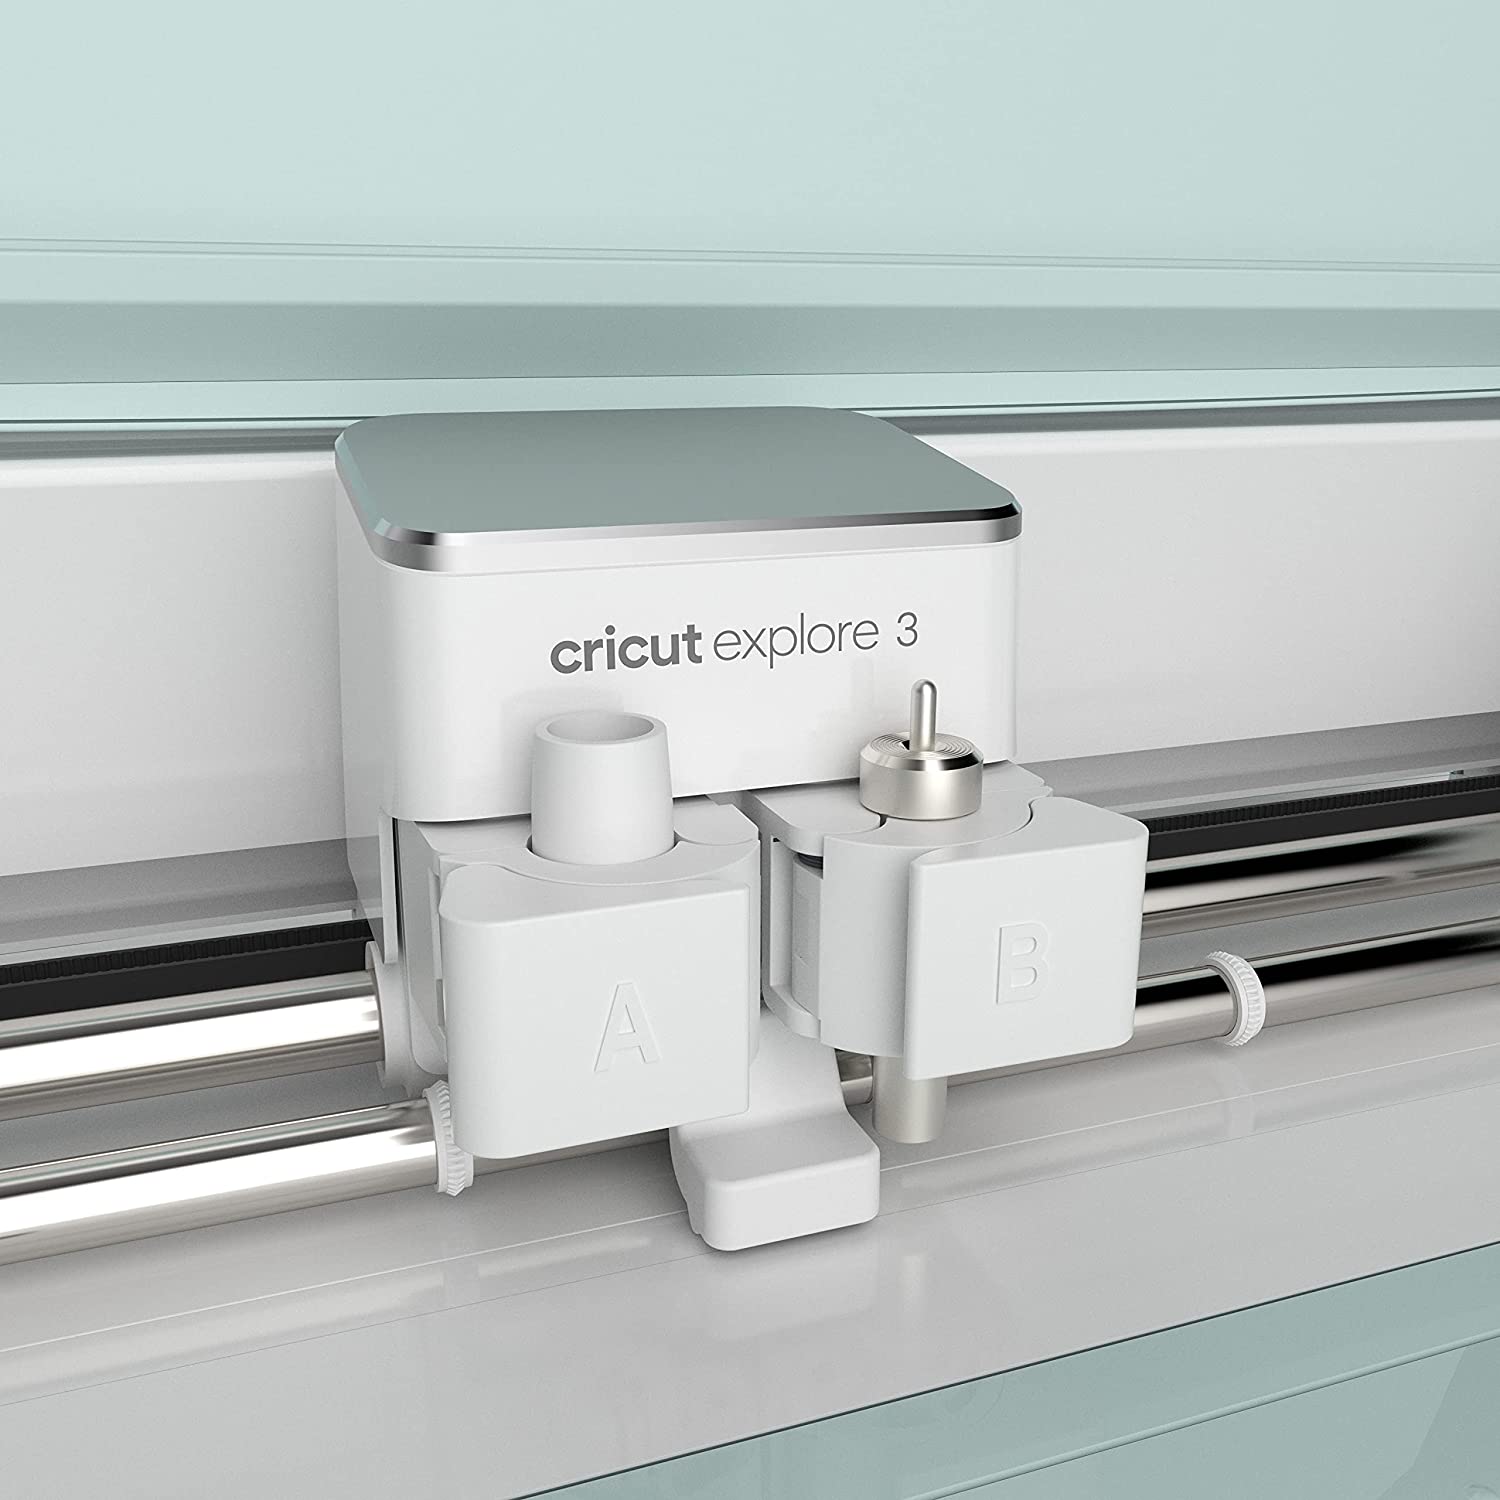 Cricut Explore 3 Smart Cutting Machine with Smart Materials